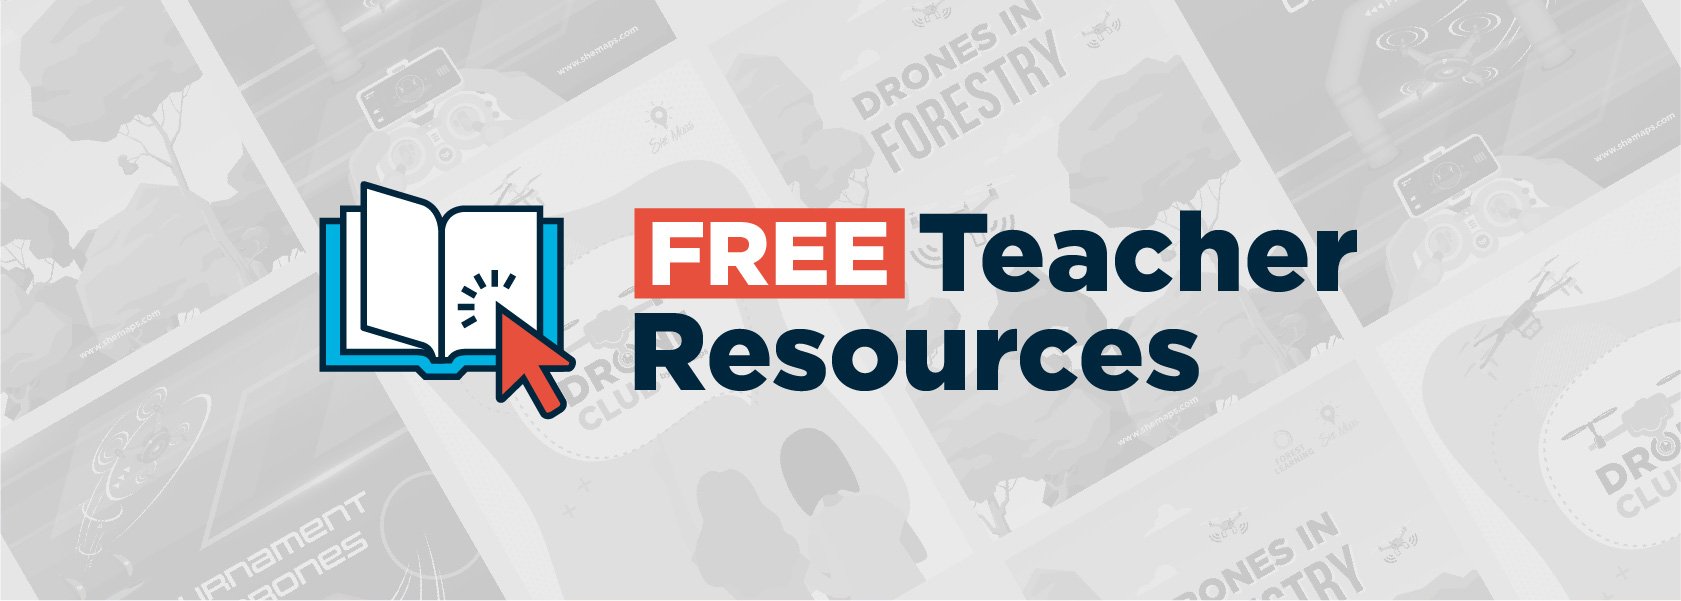 she maps free teacher resources website banner